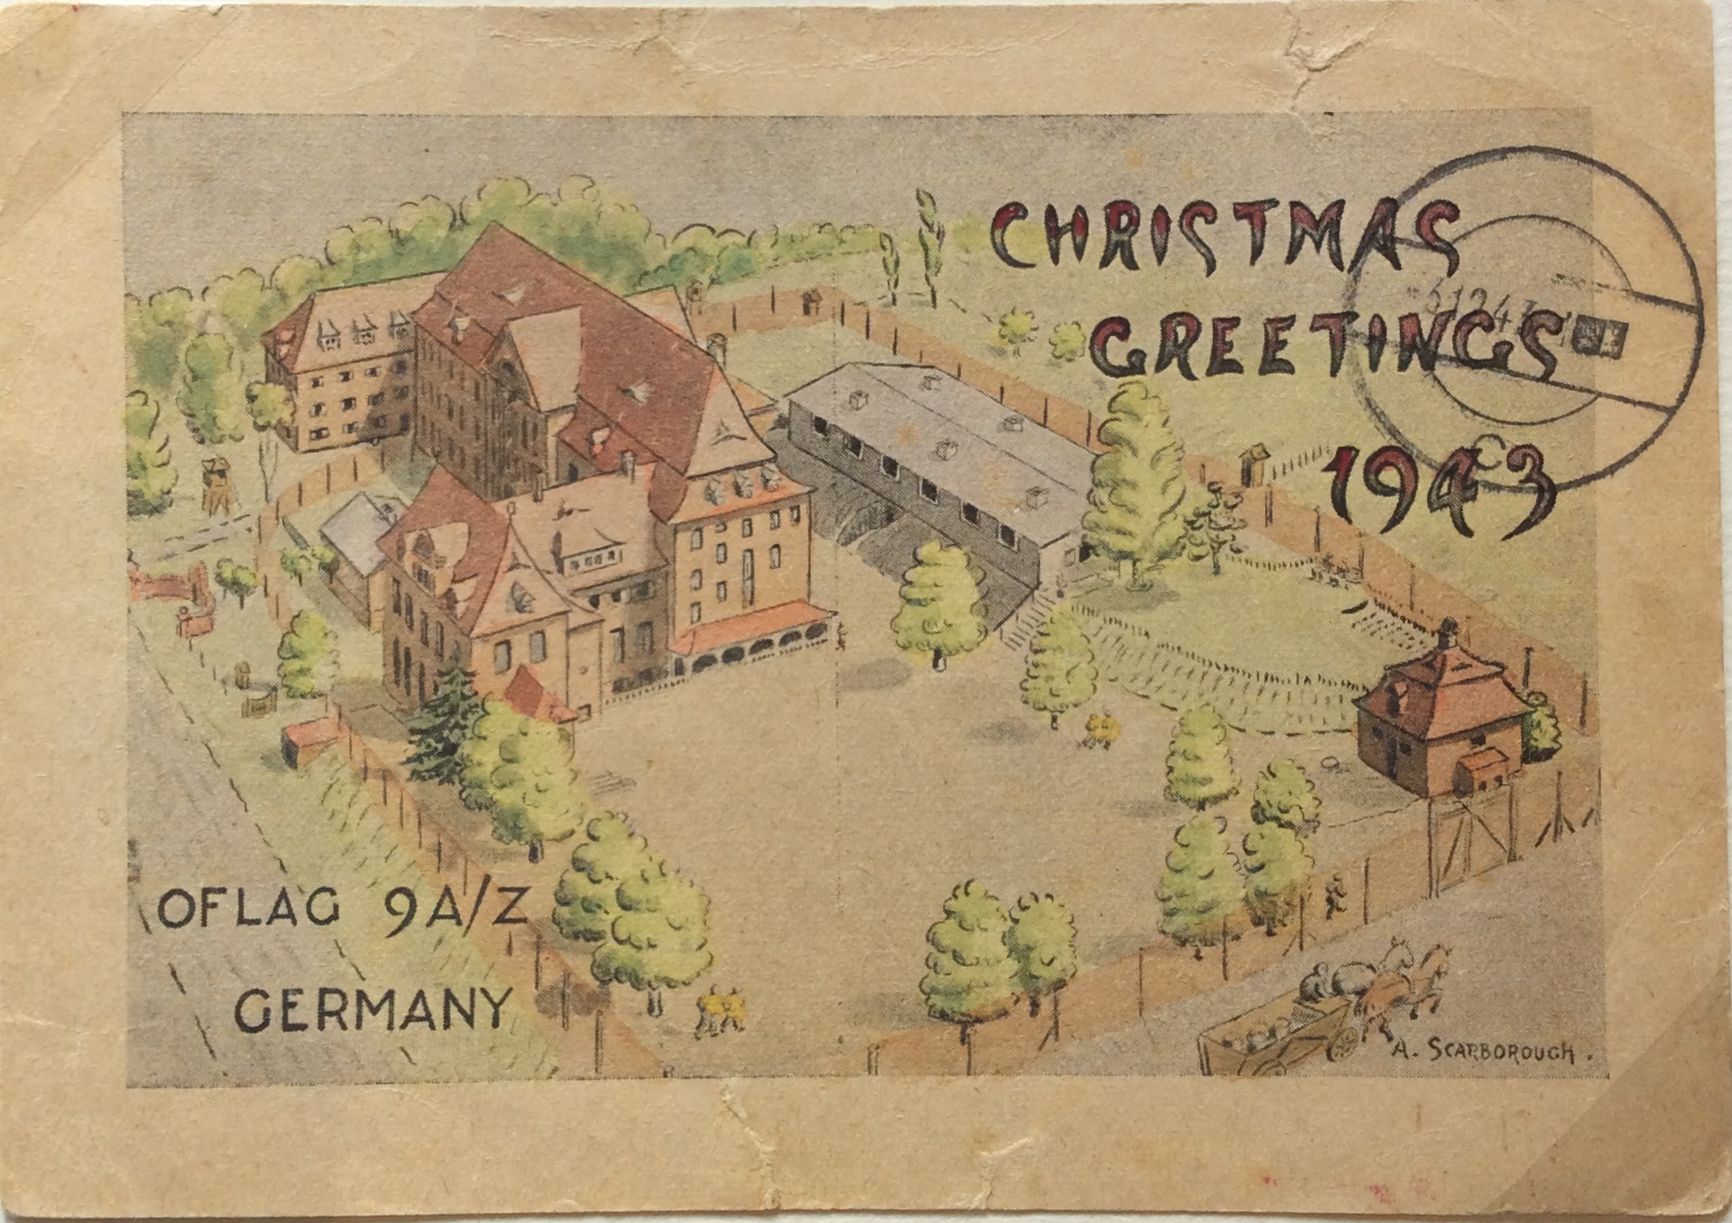 
1943;Germany;Oflag IXA/H; A. Scarborough ; WW II-Era Christmas POW Card